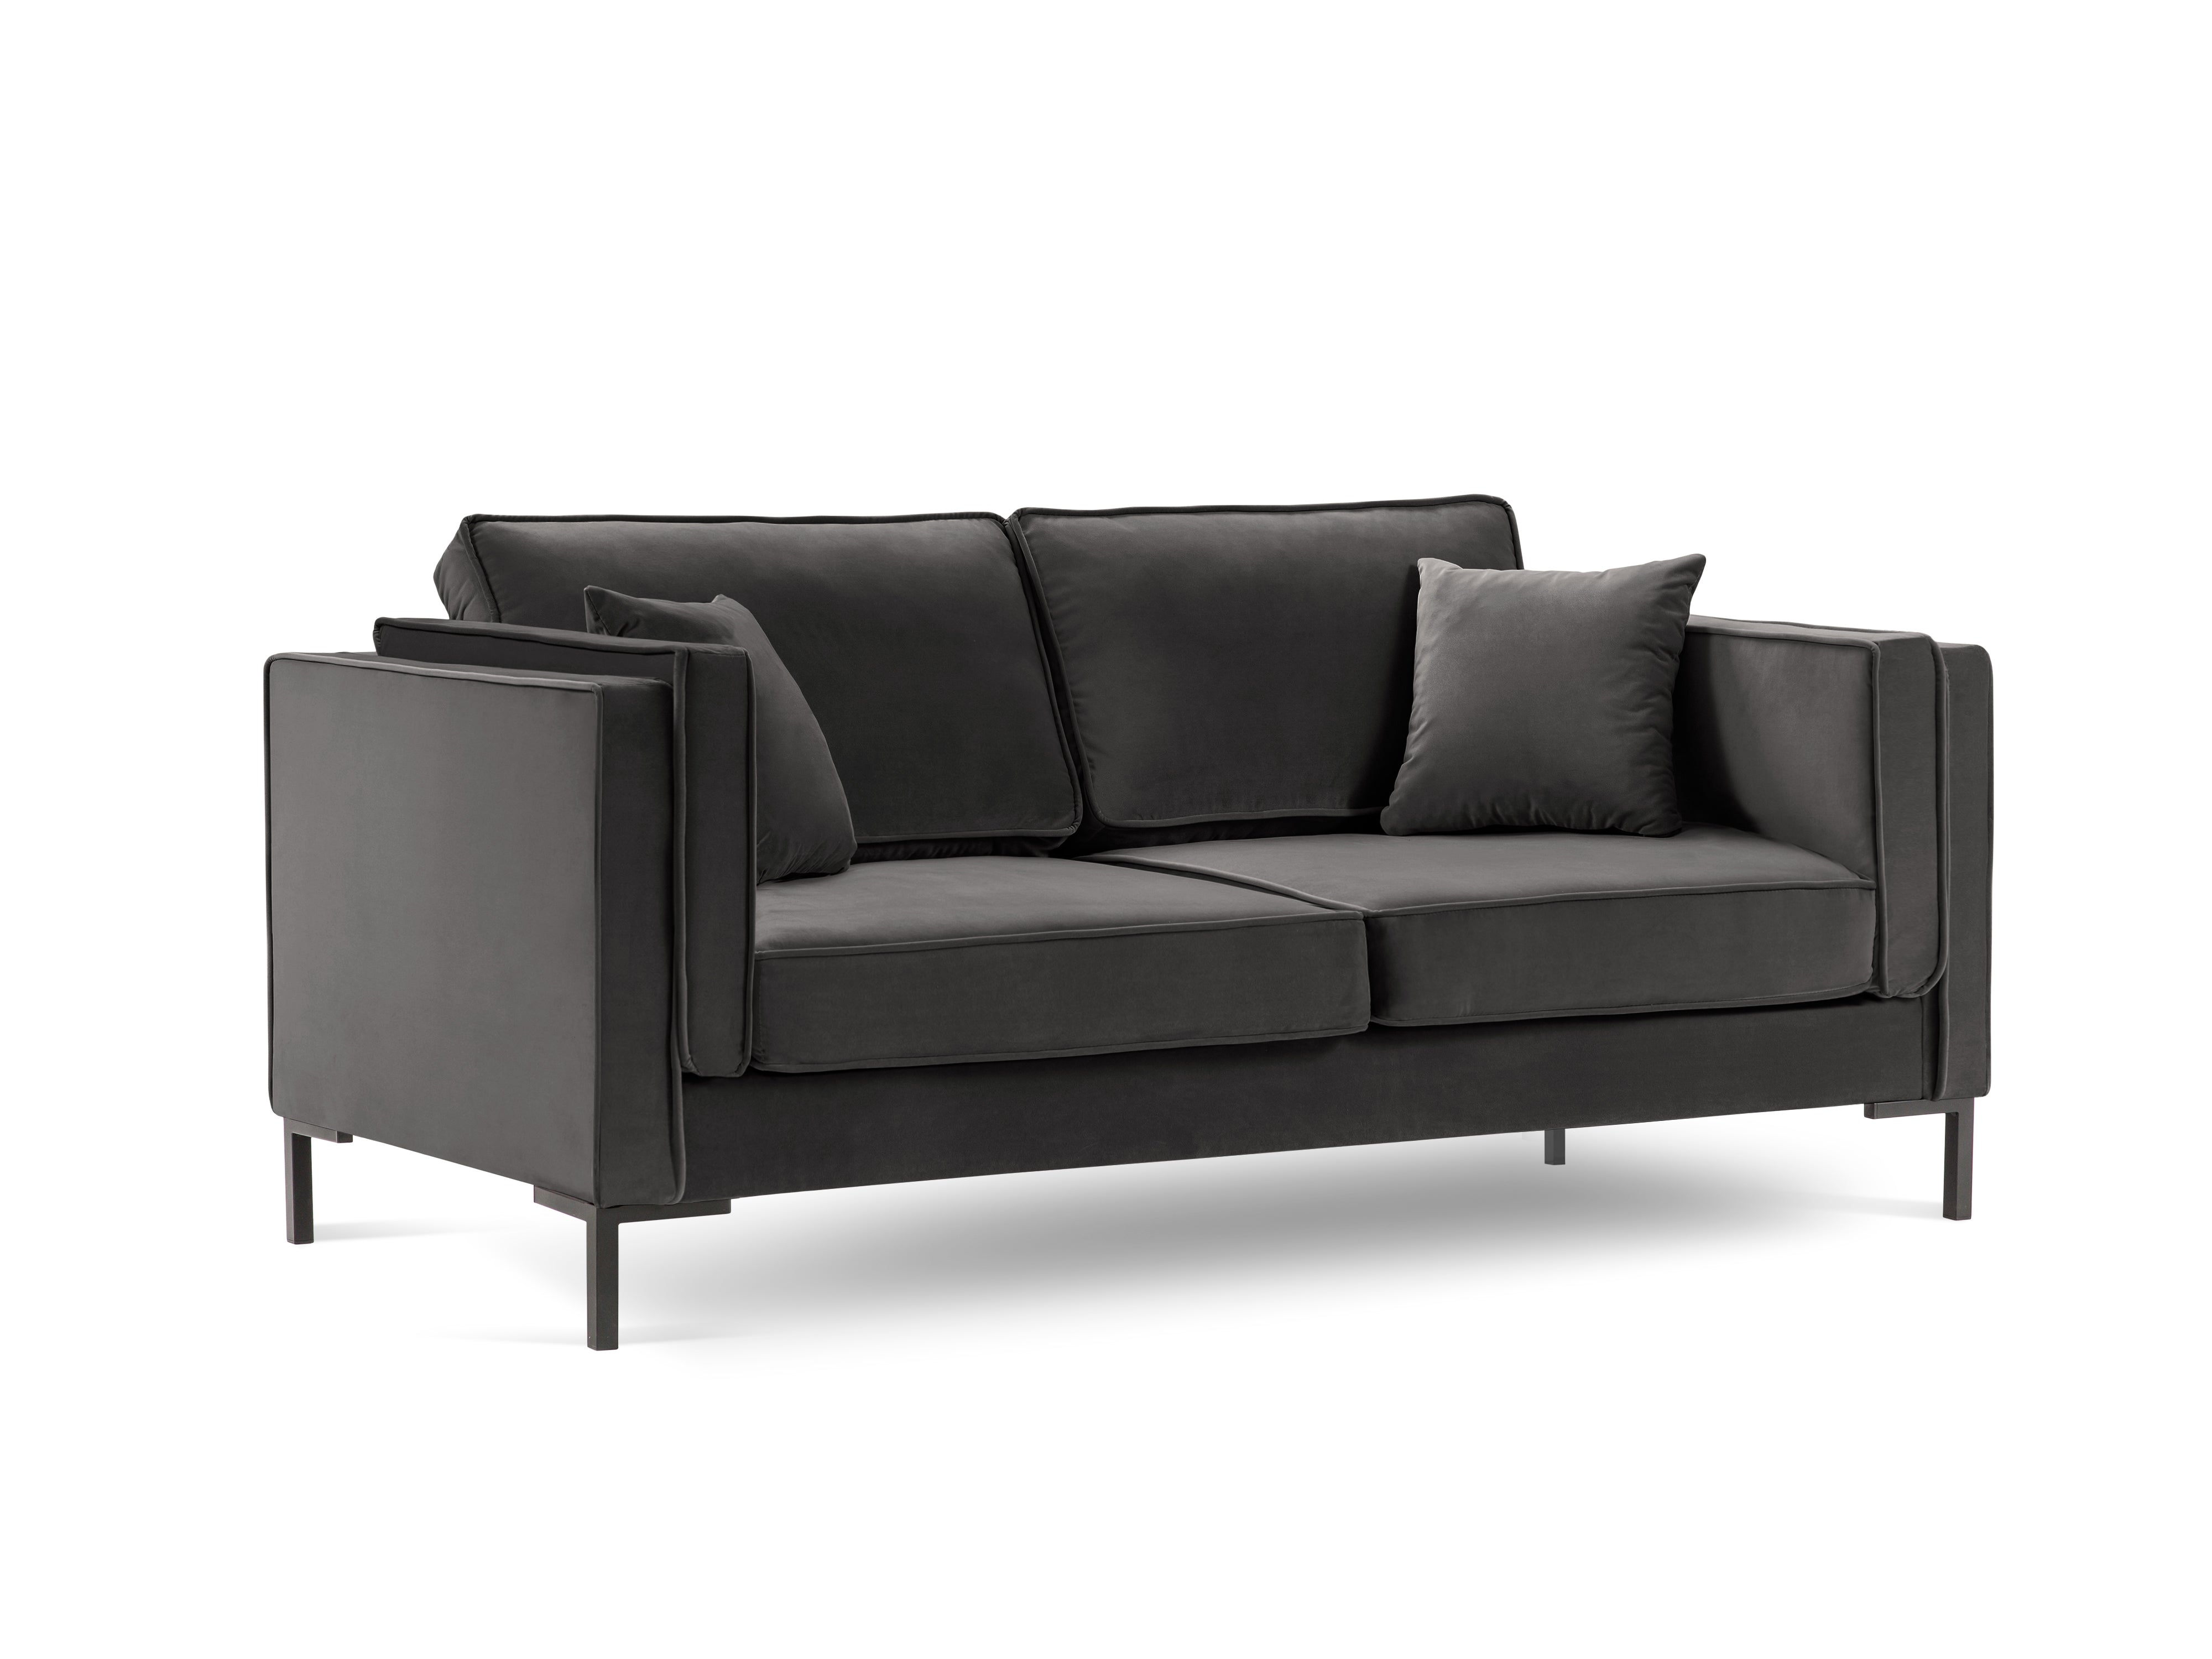 LUIS dark grey velvet 2-seater sofa with black base